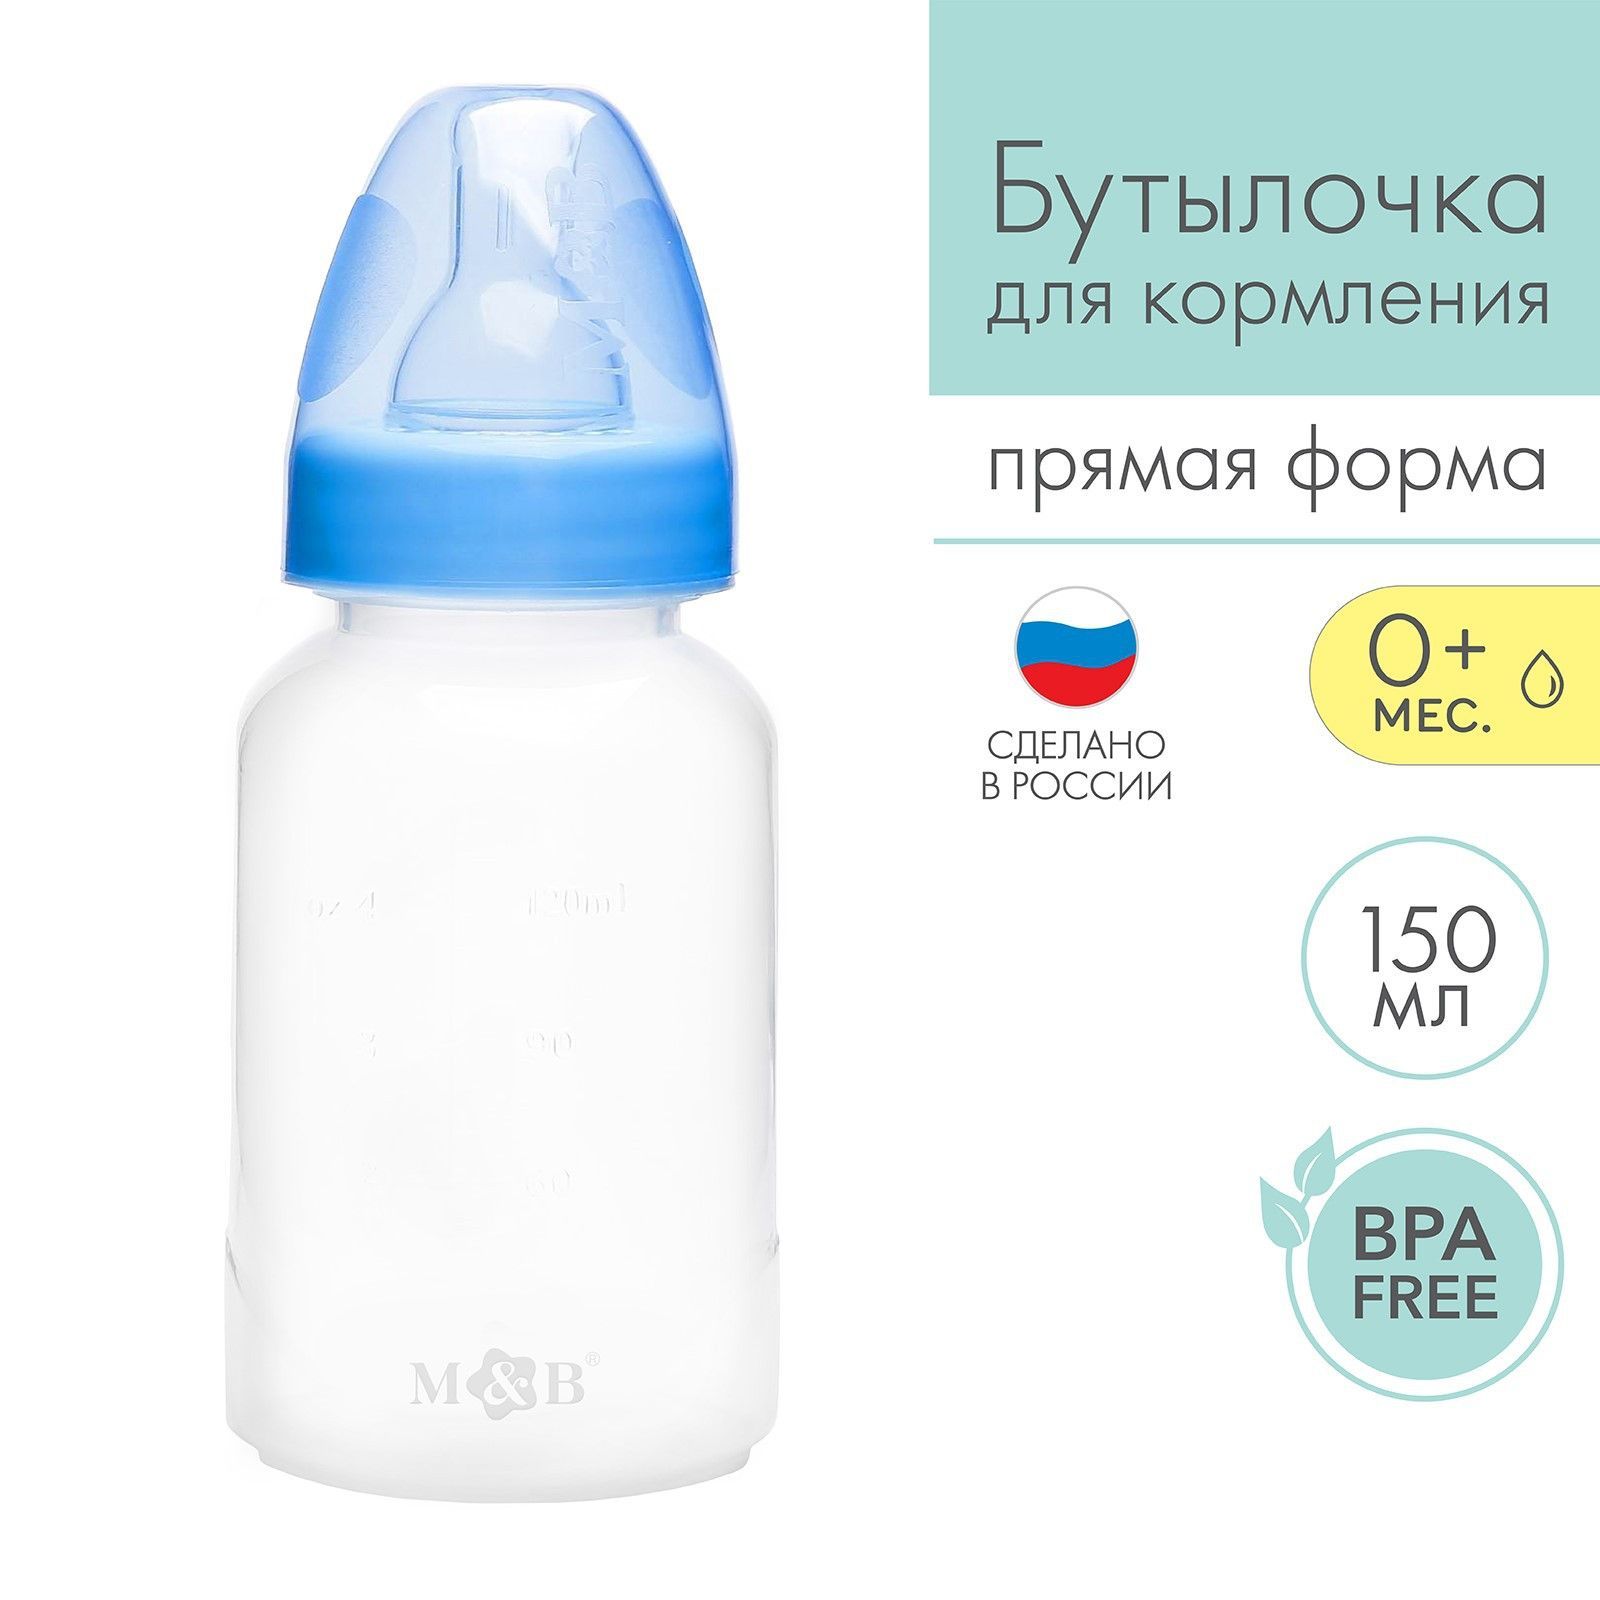 Бутылочка ру. Бутылка для кормления. Детский бутылка для кормления. Бутылочка для кормления 150 мл. Прикольные детская бутылочка для кормления.